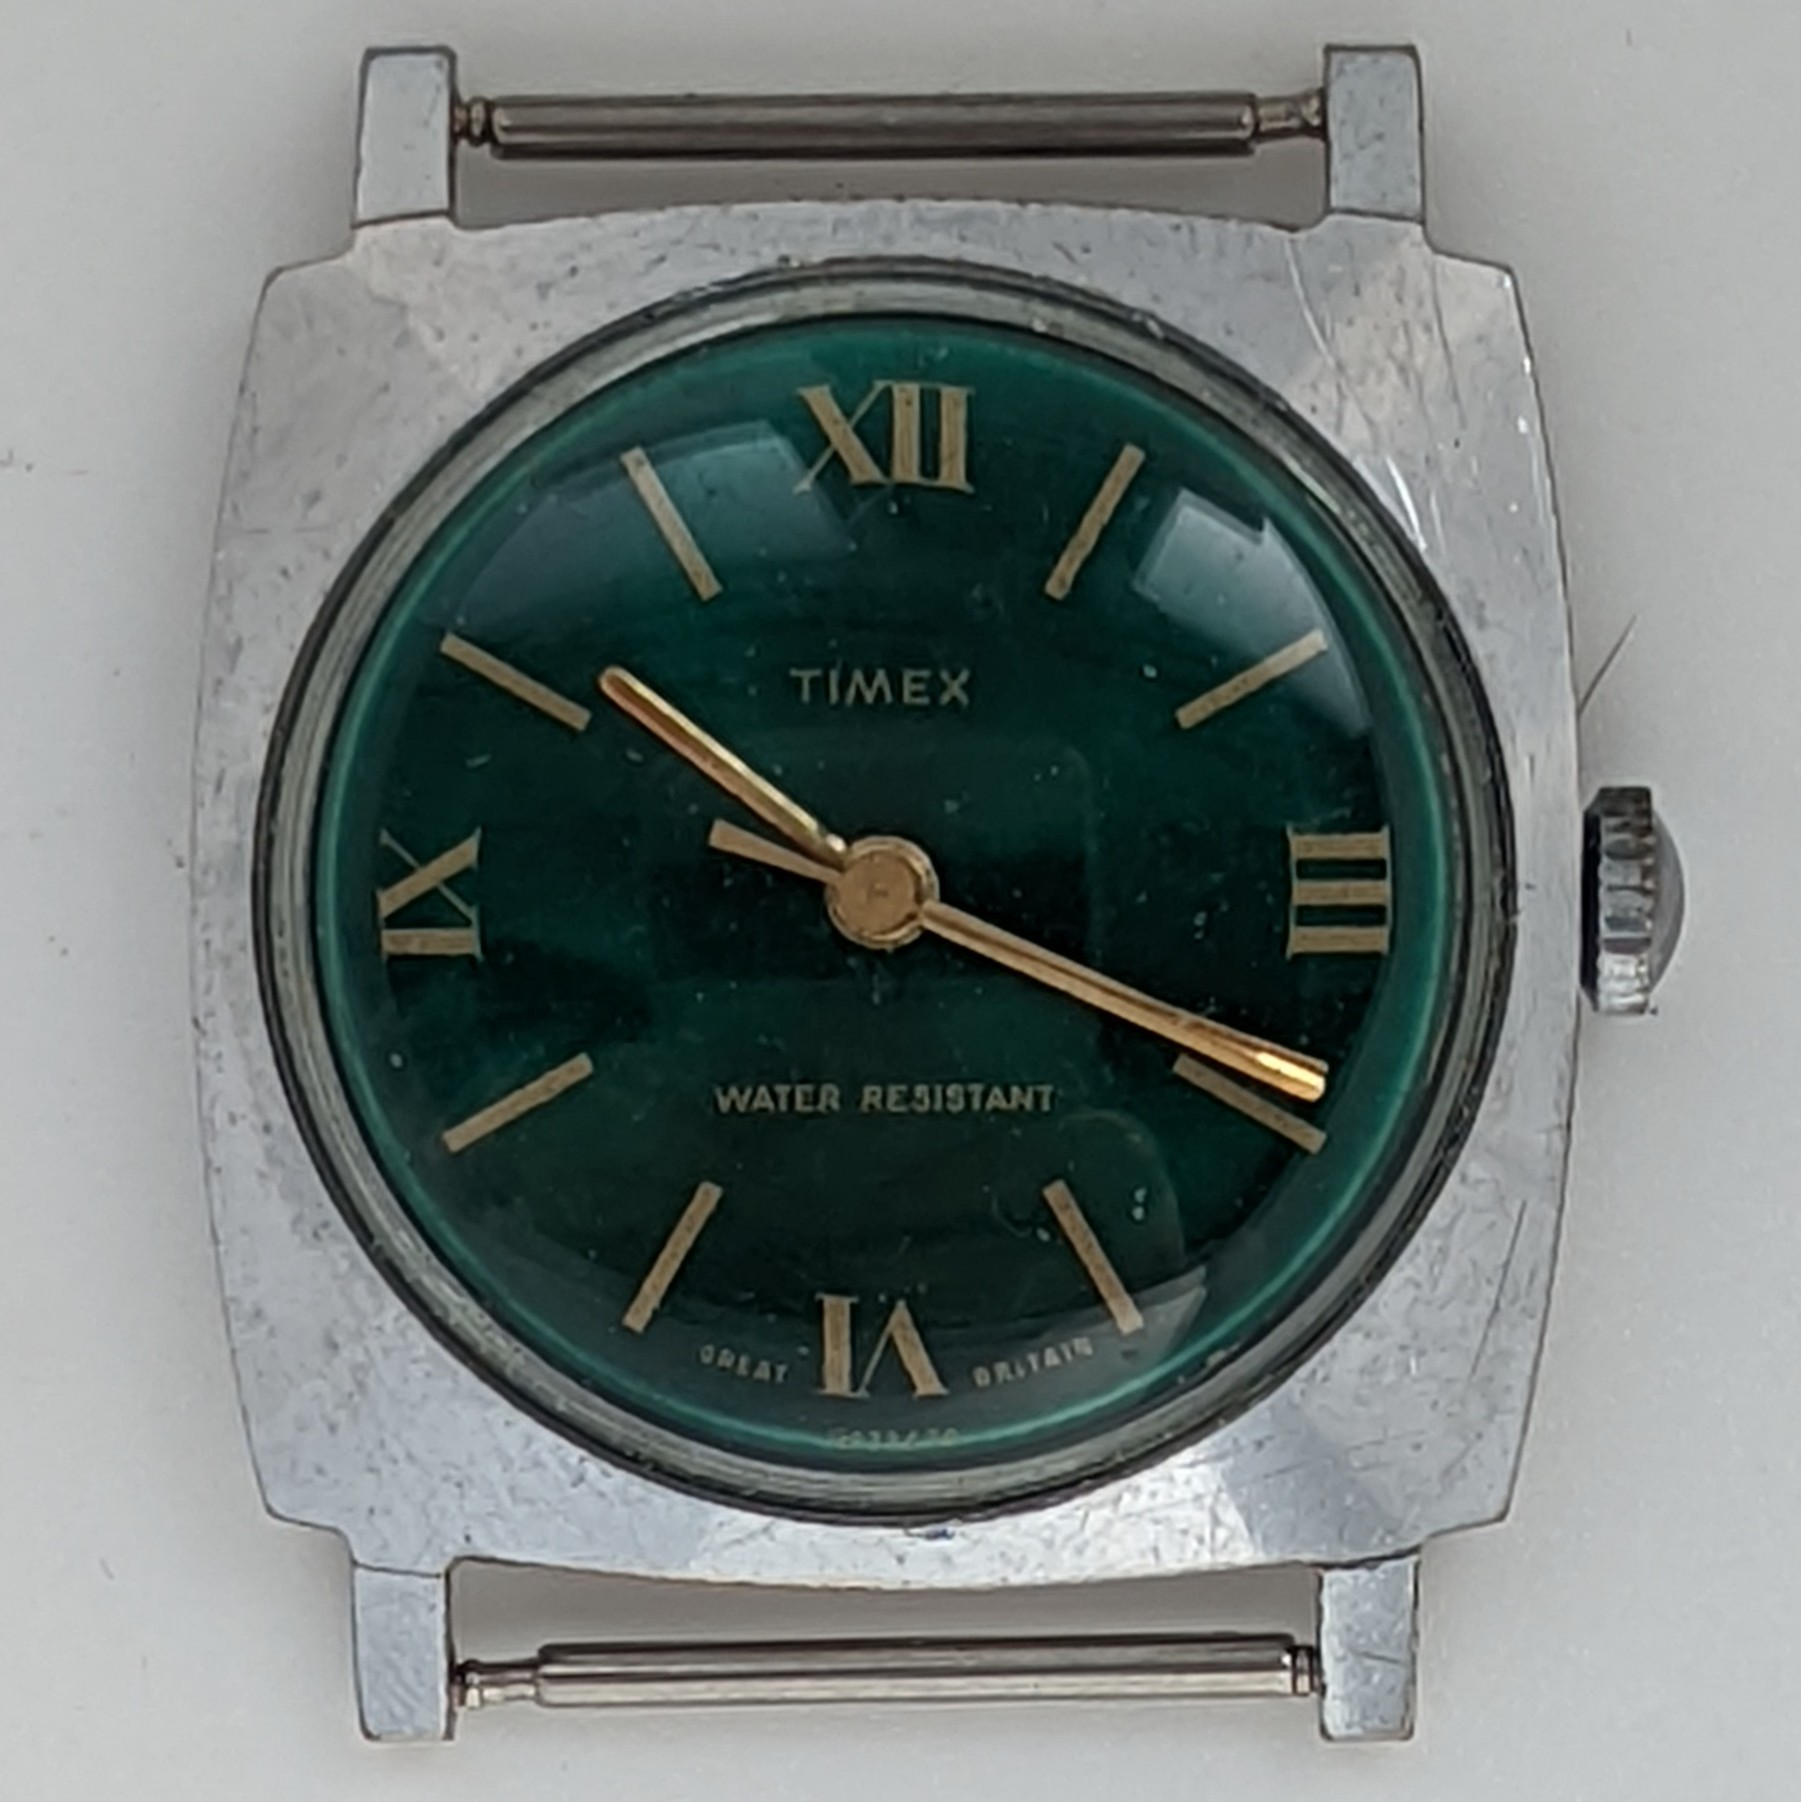 Timex Sprite 1127 2470 [1970]